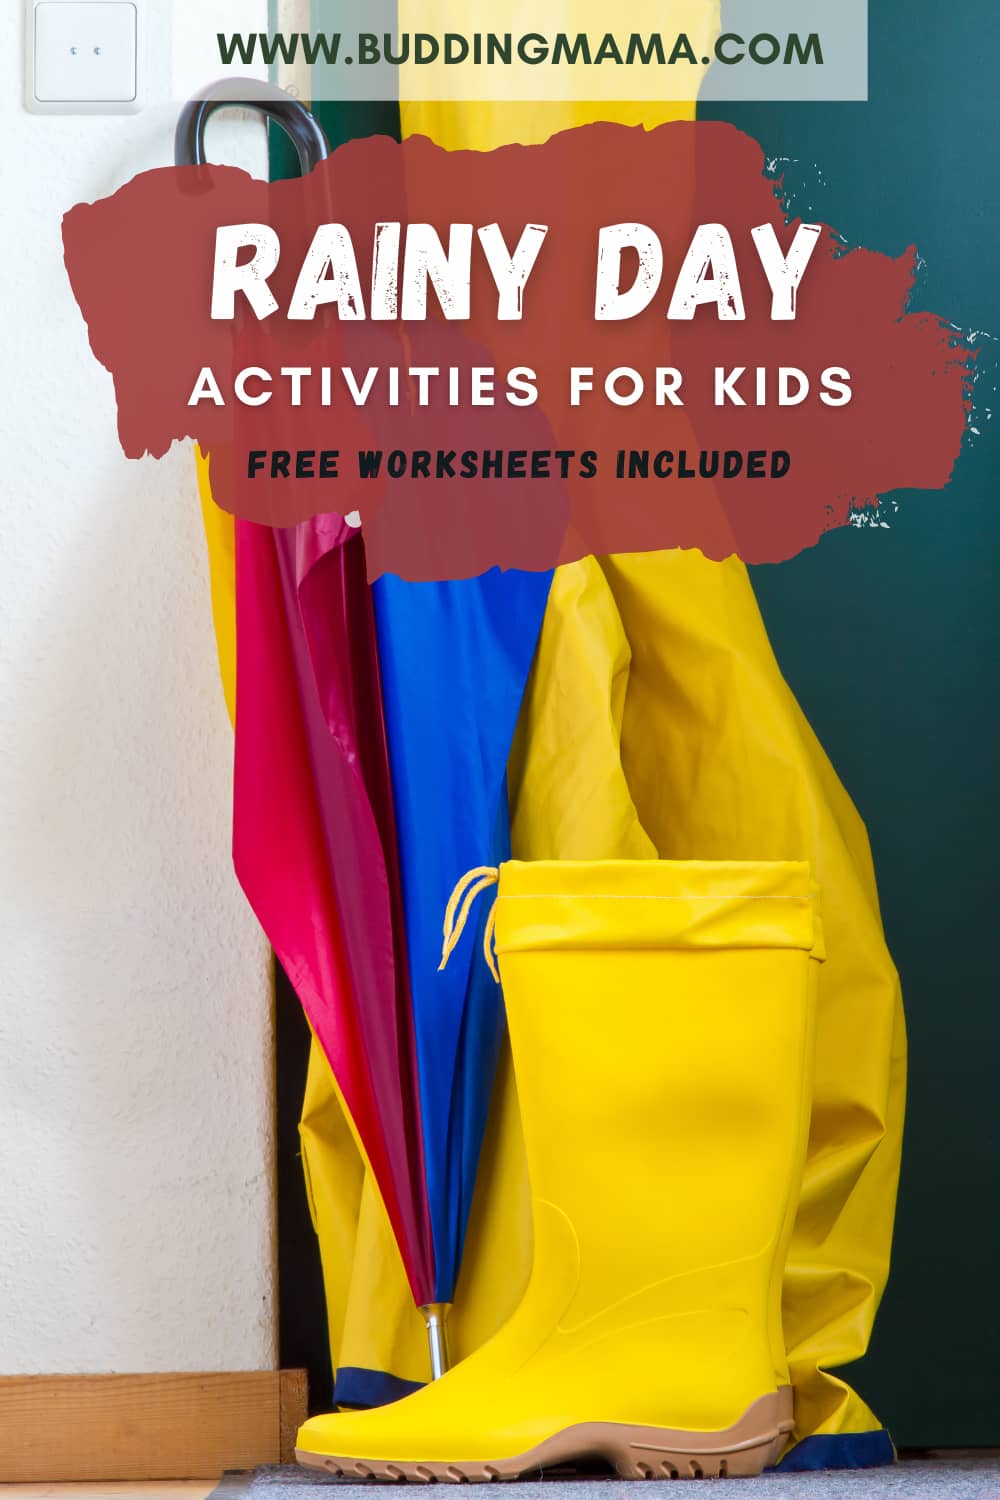 FREE Rainy Day Activities for Kids Budding Mama